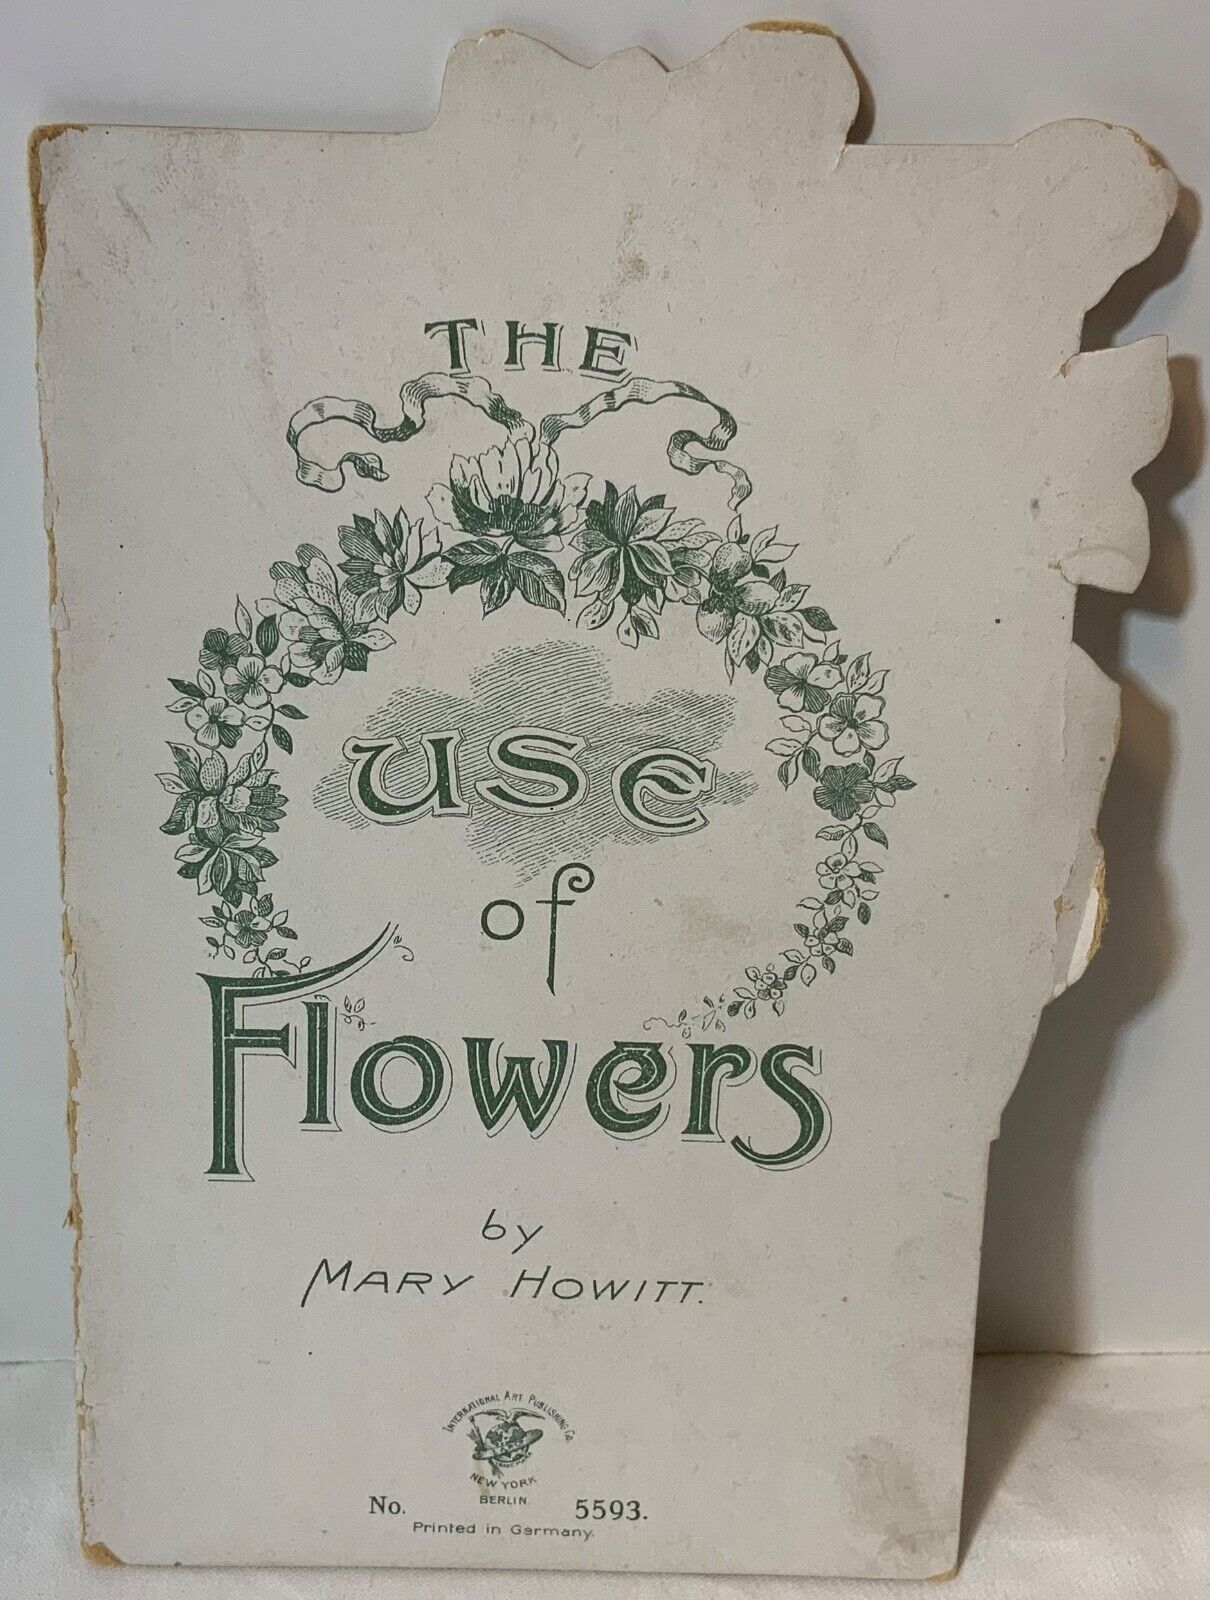 VTG Antique Ephemera “Use of Flowers” by Mary Howitt no. 5593 Poem Int’l Art Pub